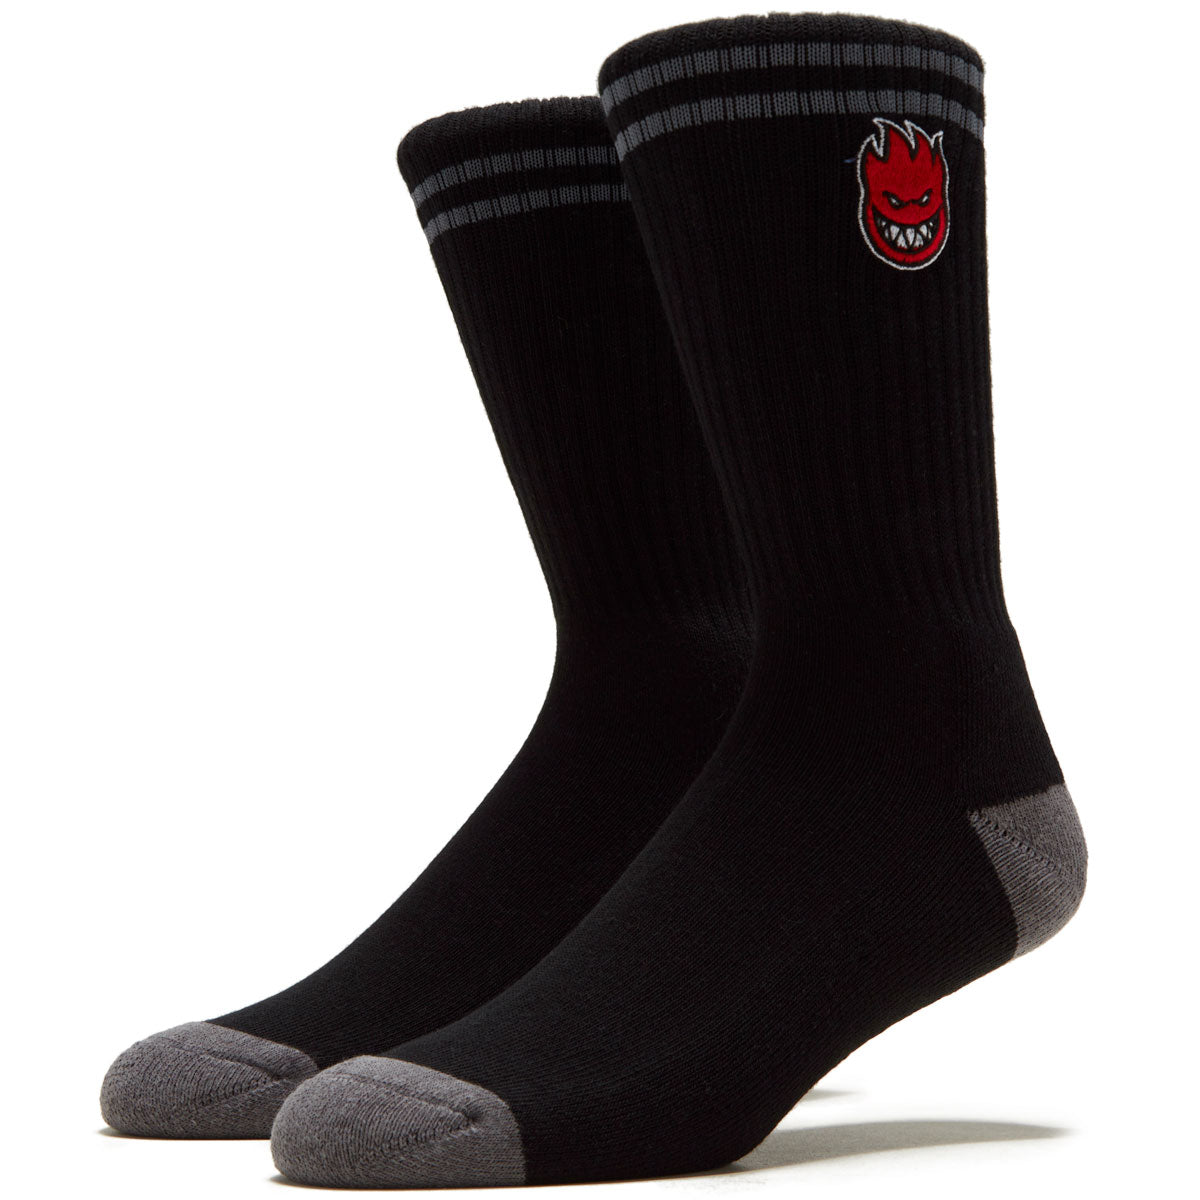 Spitfire Bighead Fill Emb Socks - Black/Charcoal/Red image 1